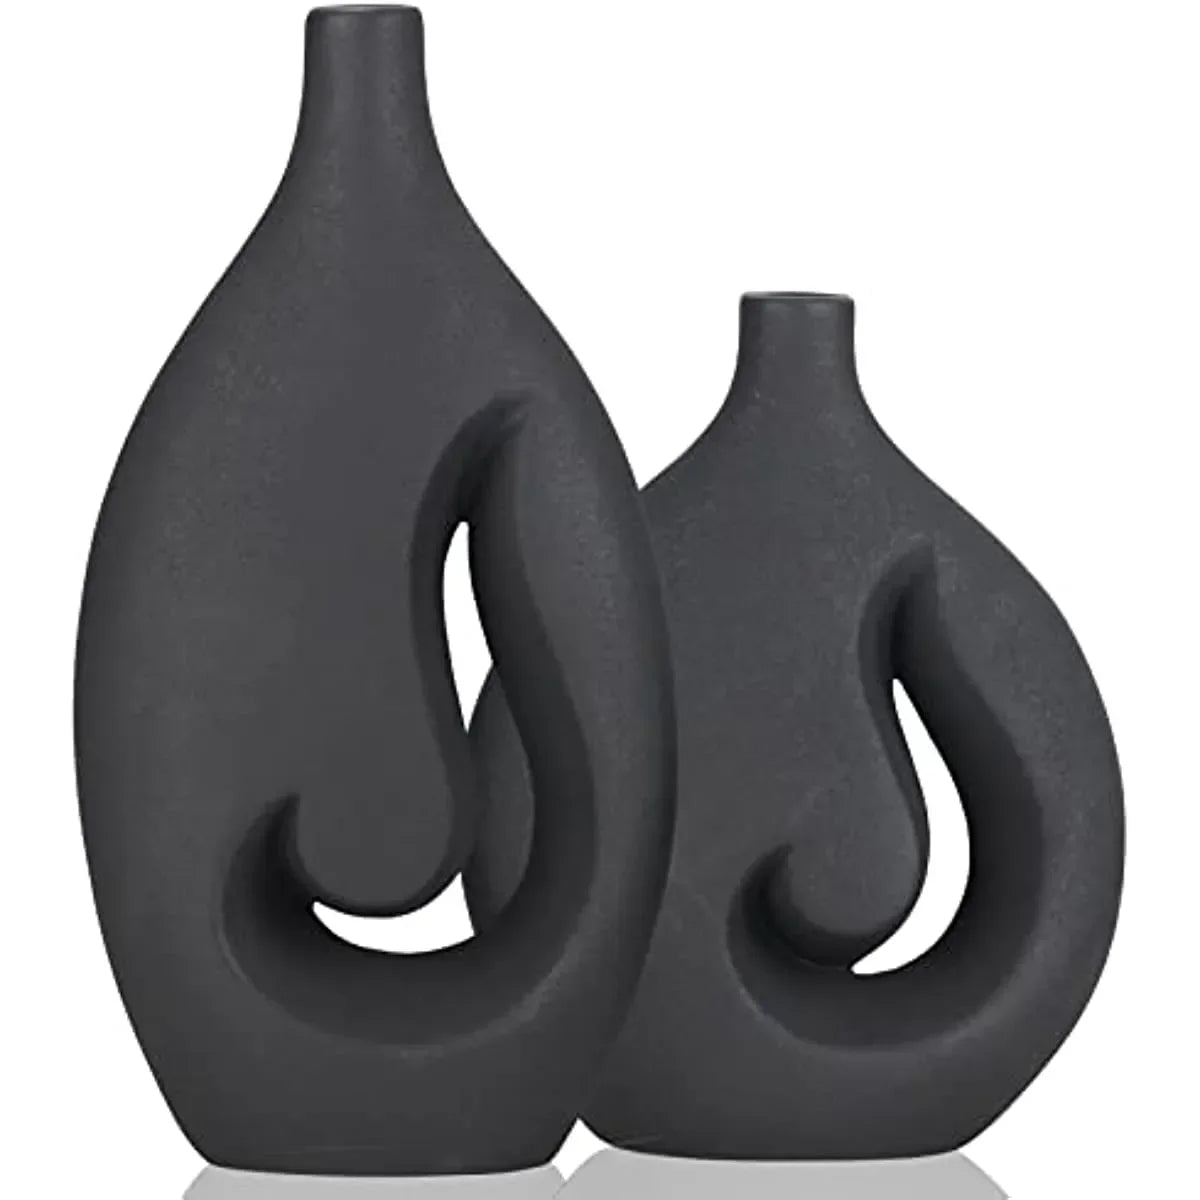 Black Ceramic Flame Hollow Vases Set of 2 Modern Decorative Vase Centerpiece for Wedding Dinner Table Party Living Room Office